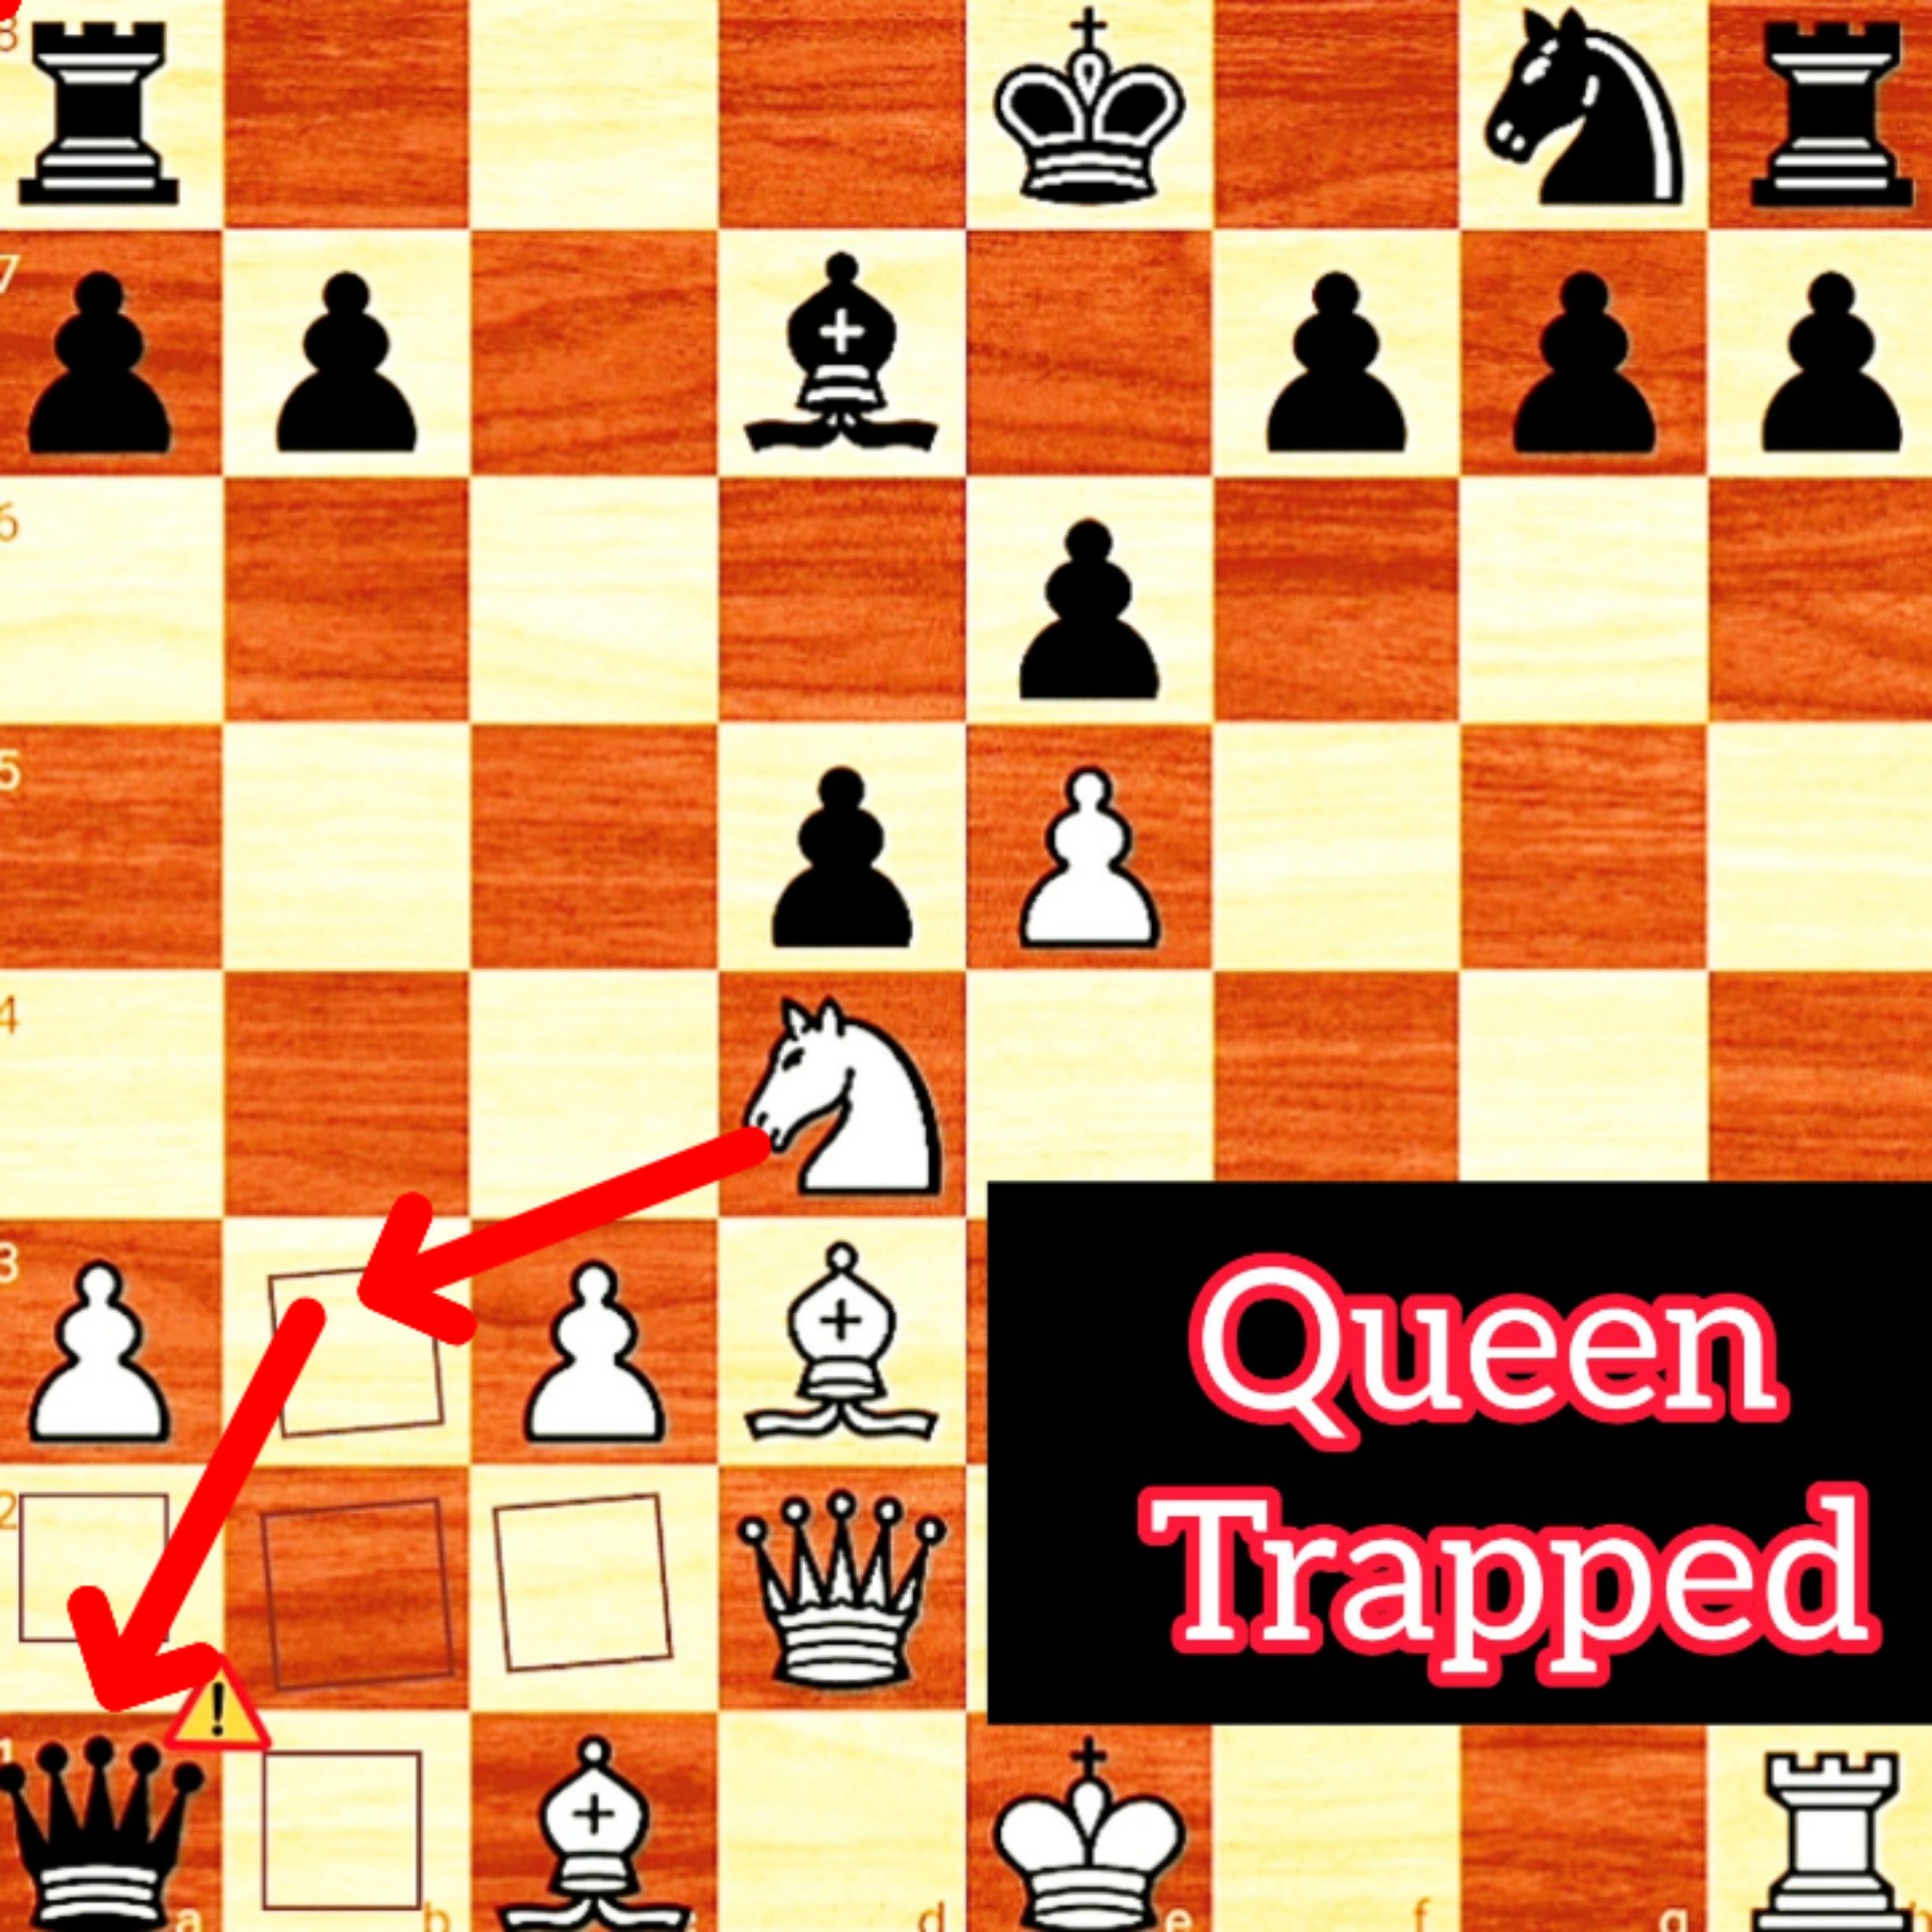 Chess Traps